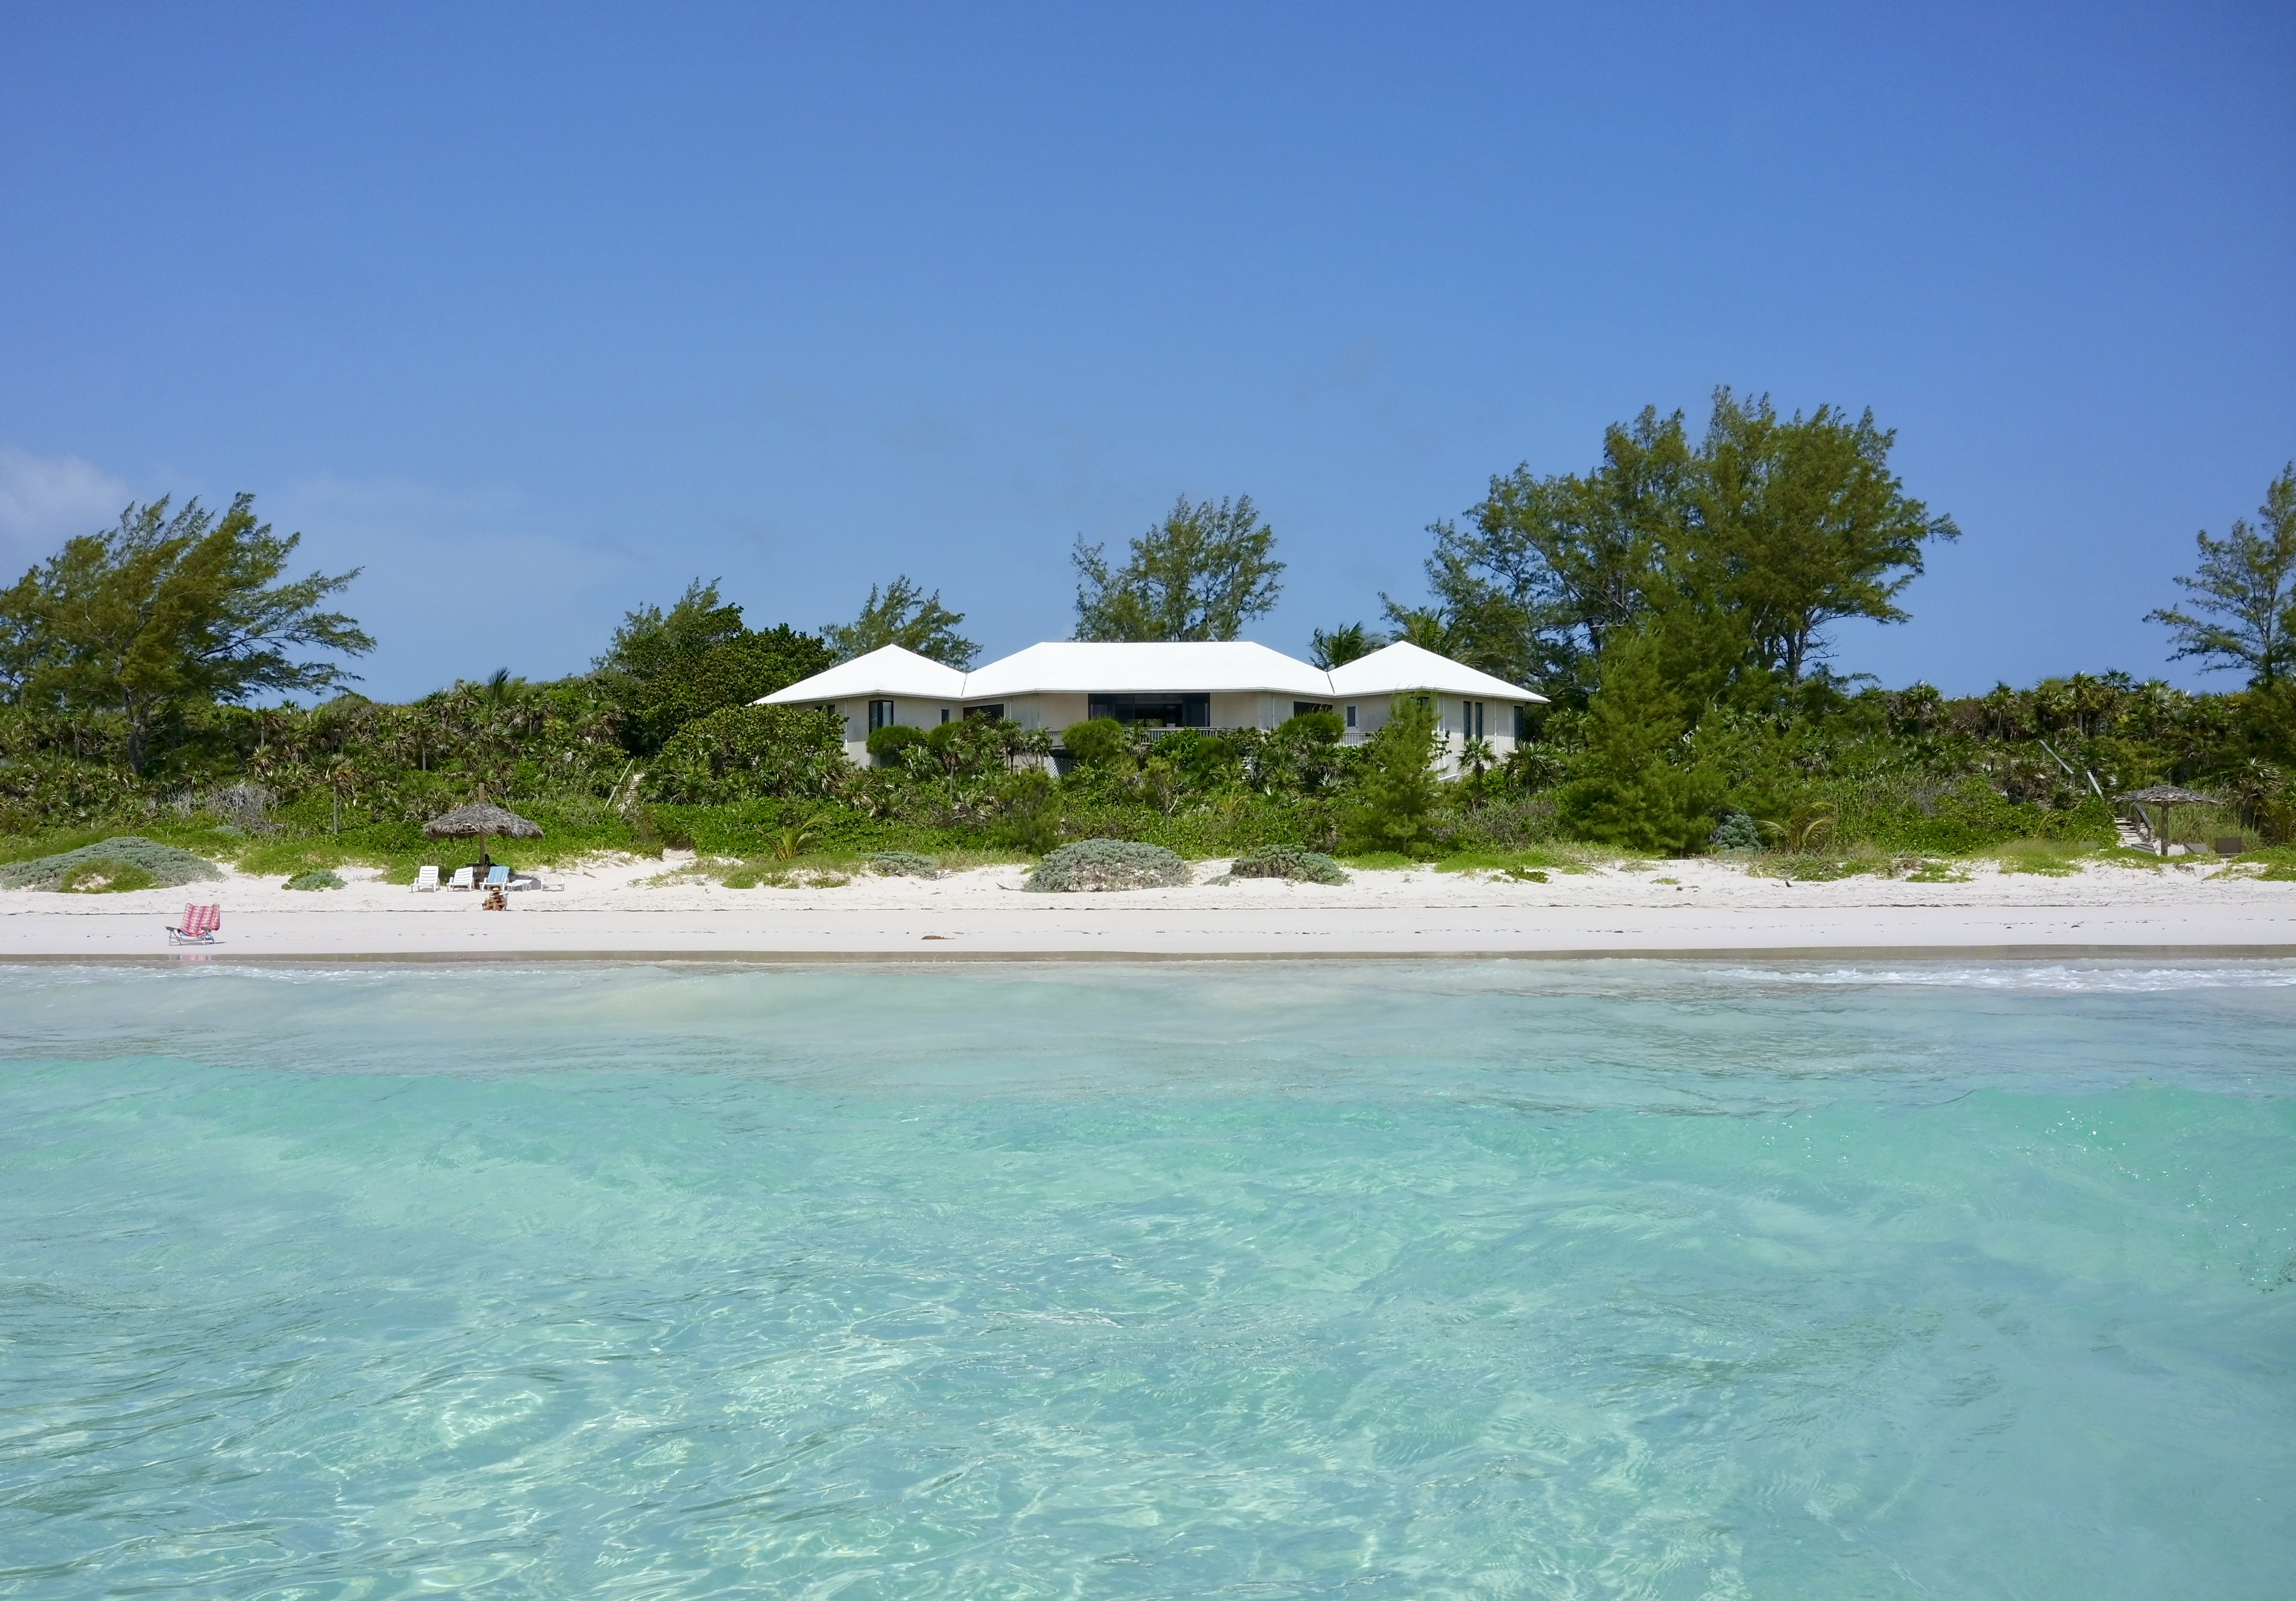 Secluded Bahamas beach house where Princess Diana holidayed with